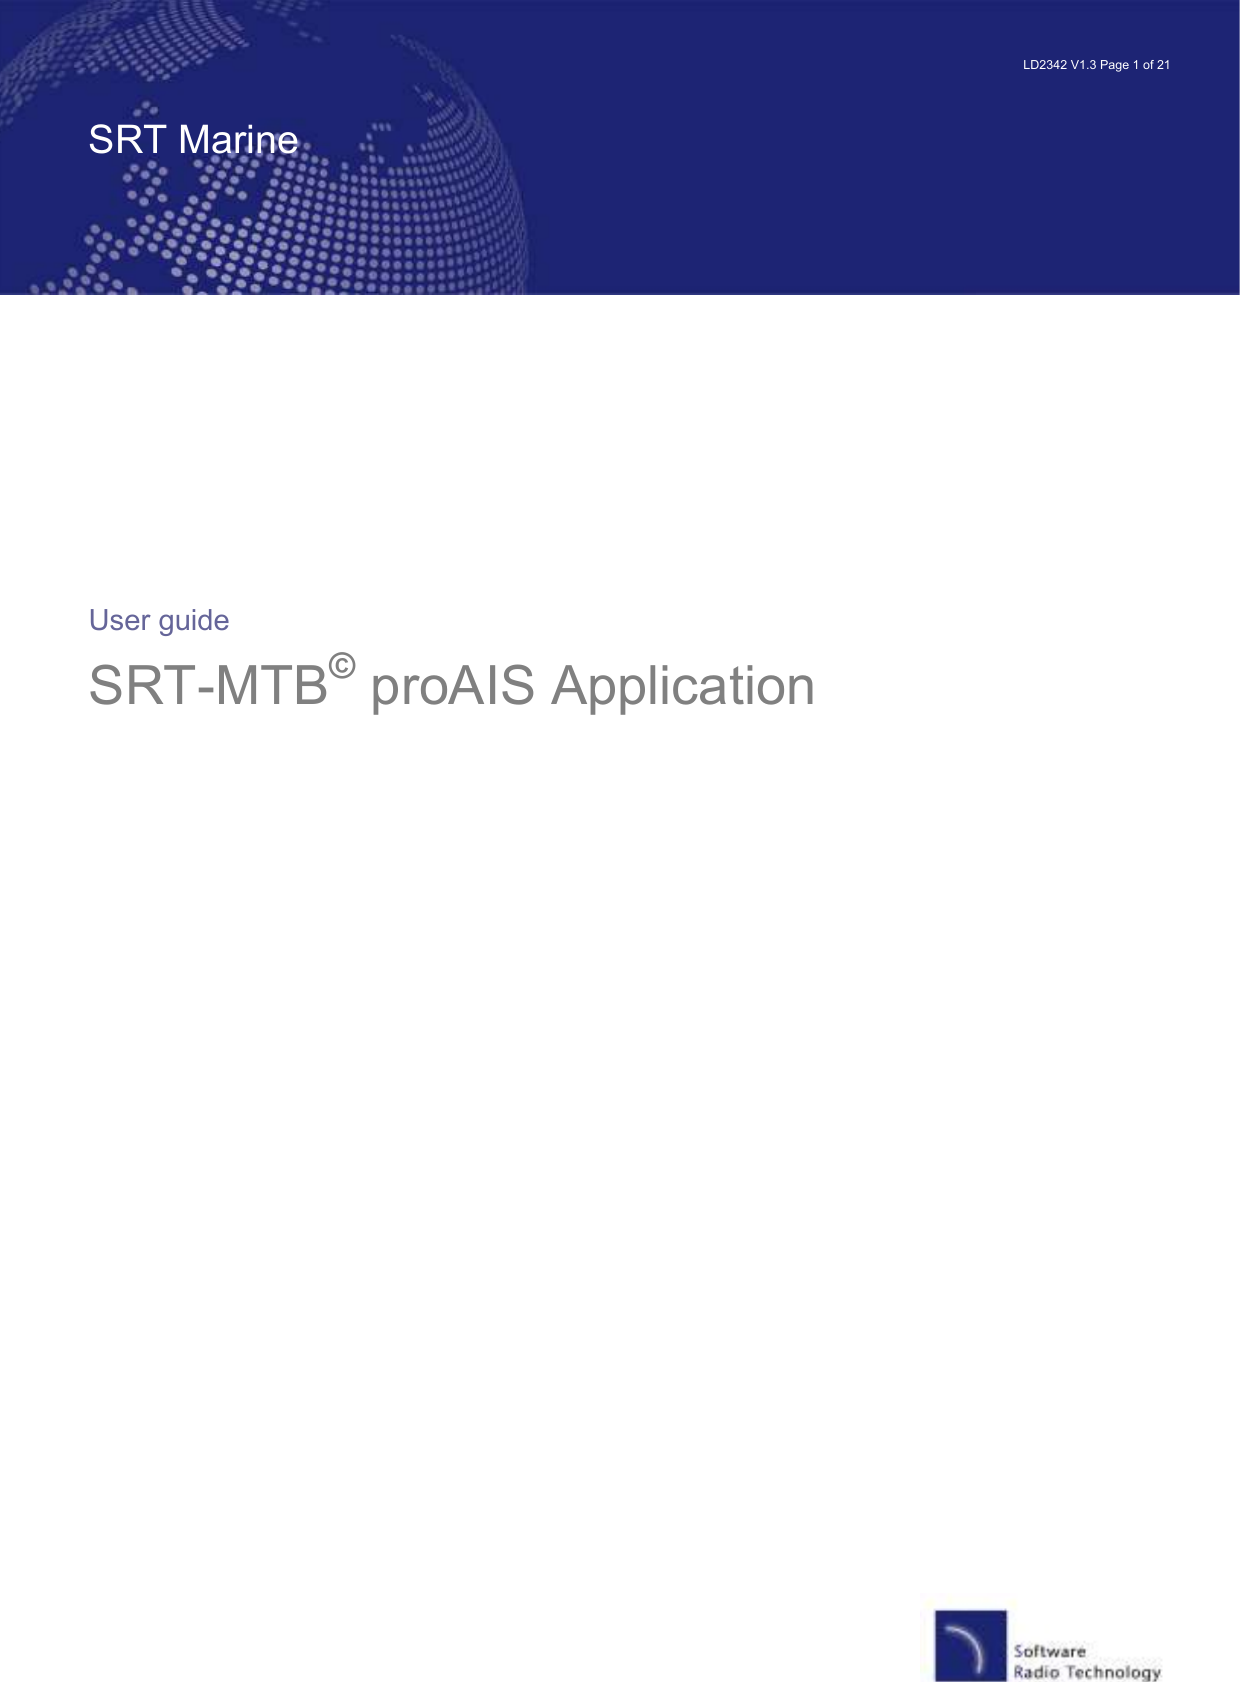   LD2342 V1.3 Page 1 of 21 SRT Marine         User guide SRT-MTB© proAIS Application     